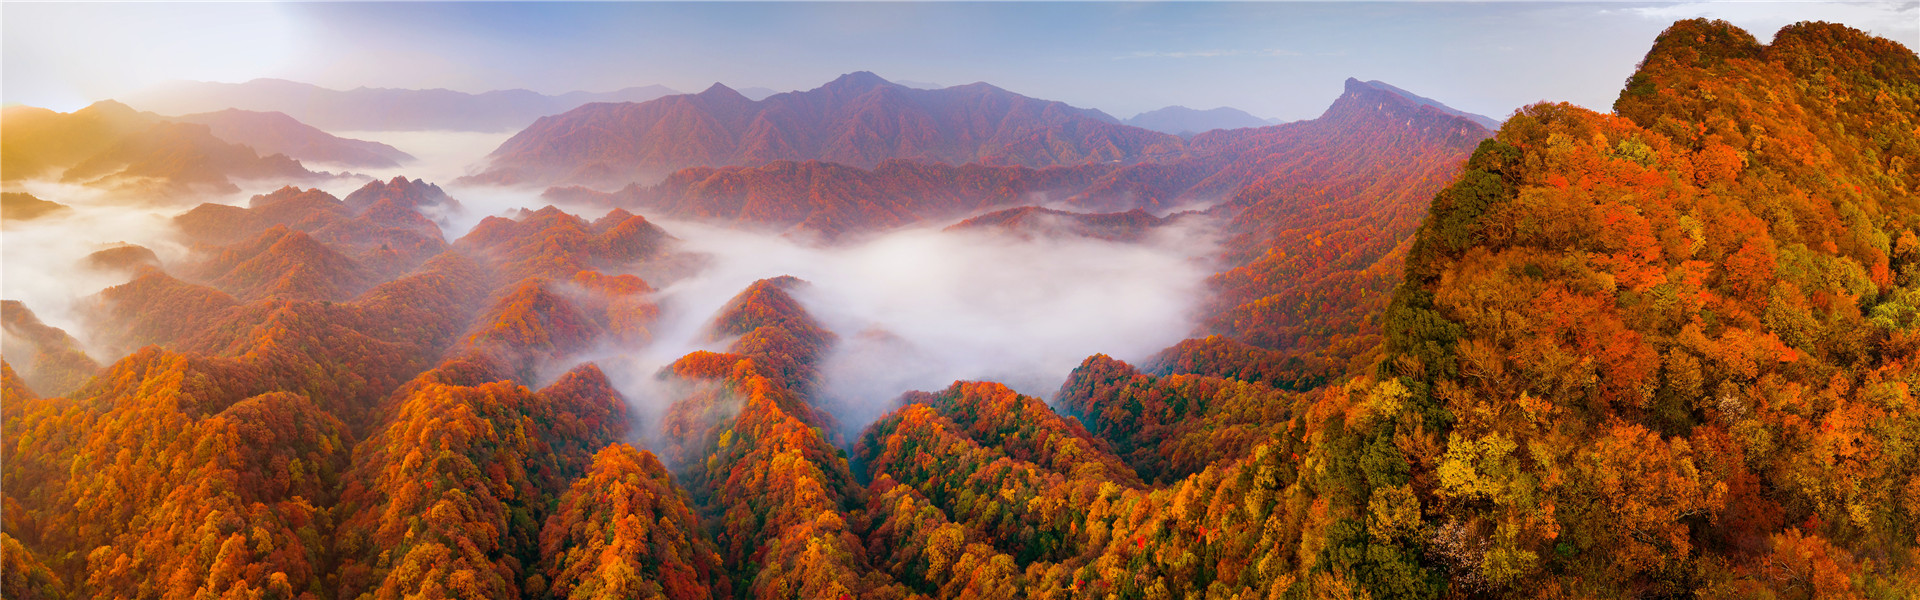 Guangwu Mountain Scenic Area